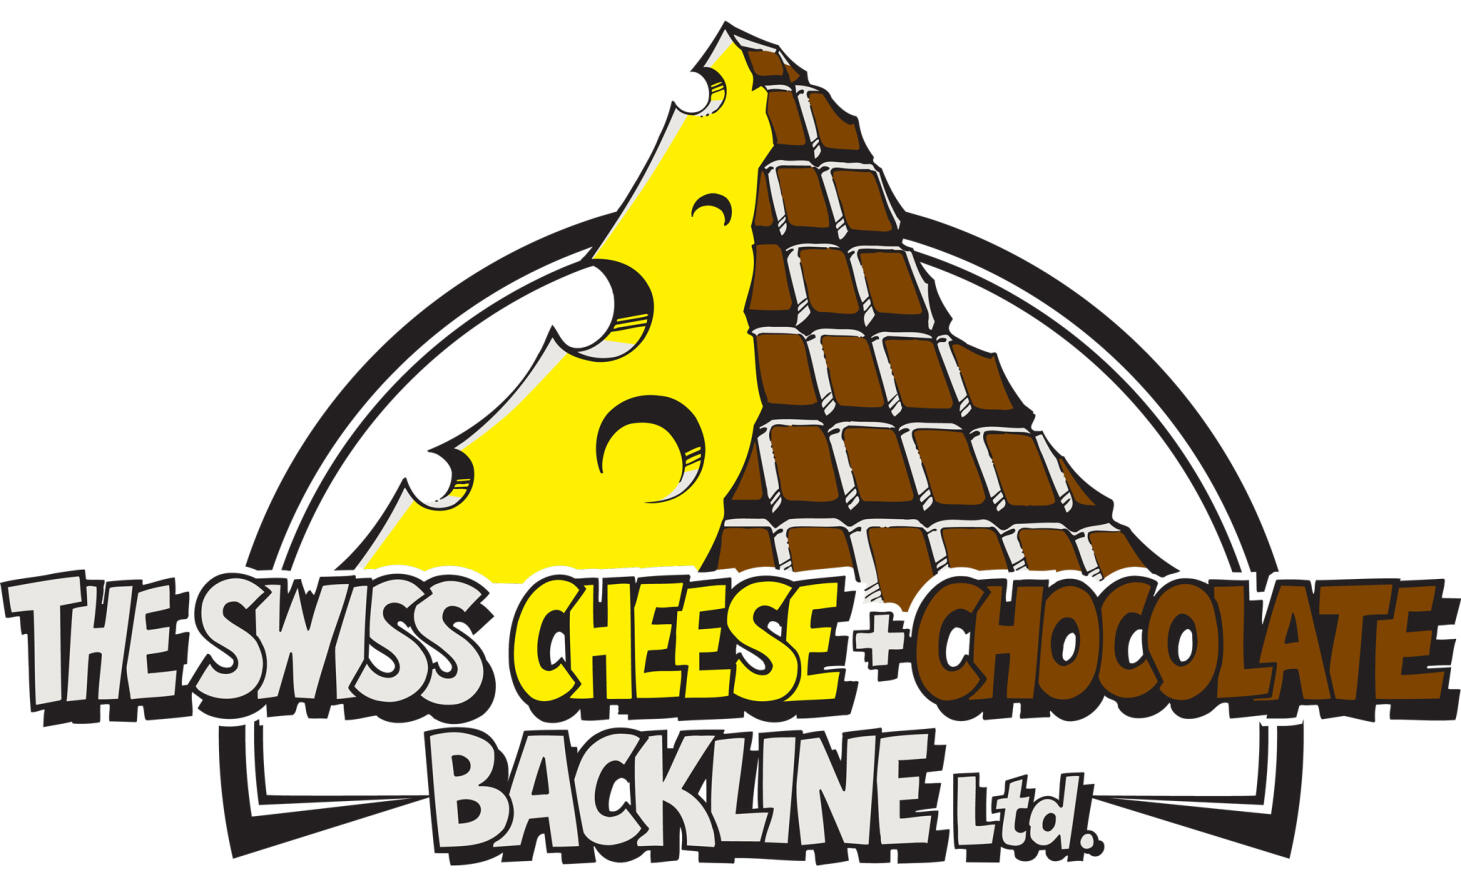 The Swiss Cheese & Chocolate Backline Ltd.